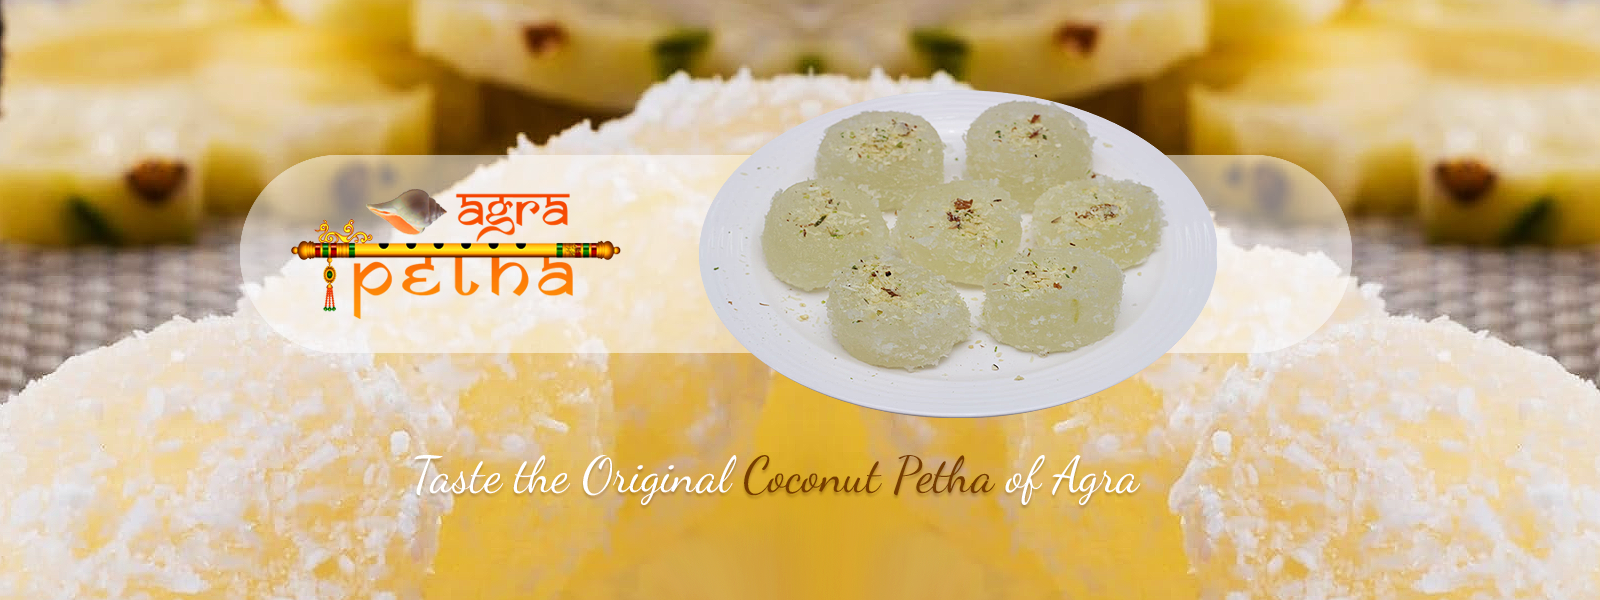 agrapetha-coconut-petha